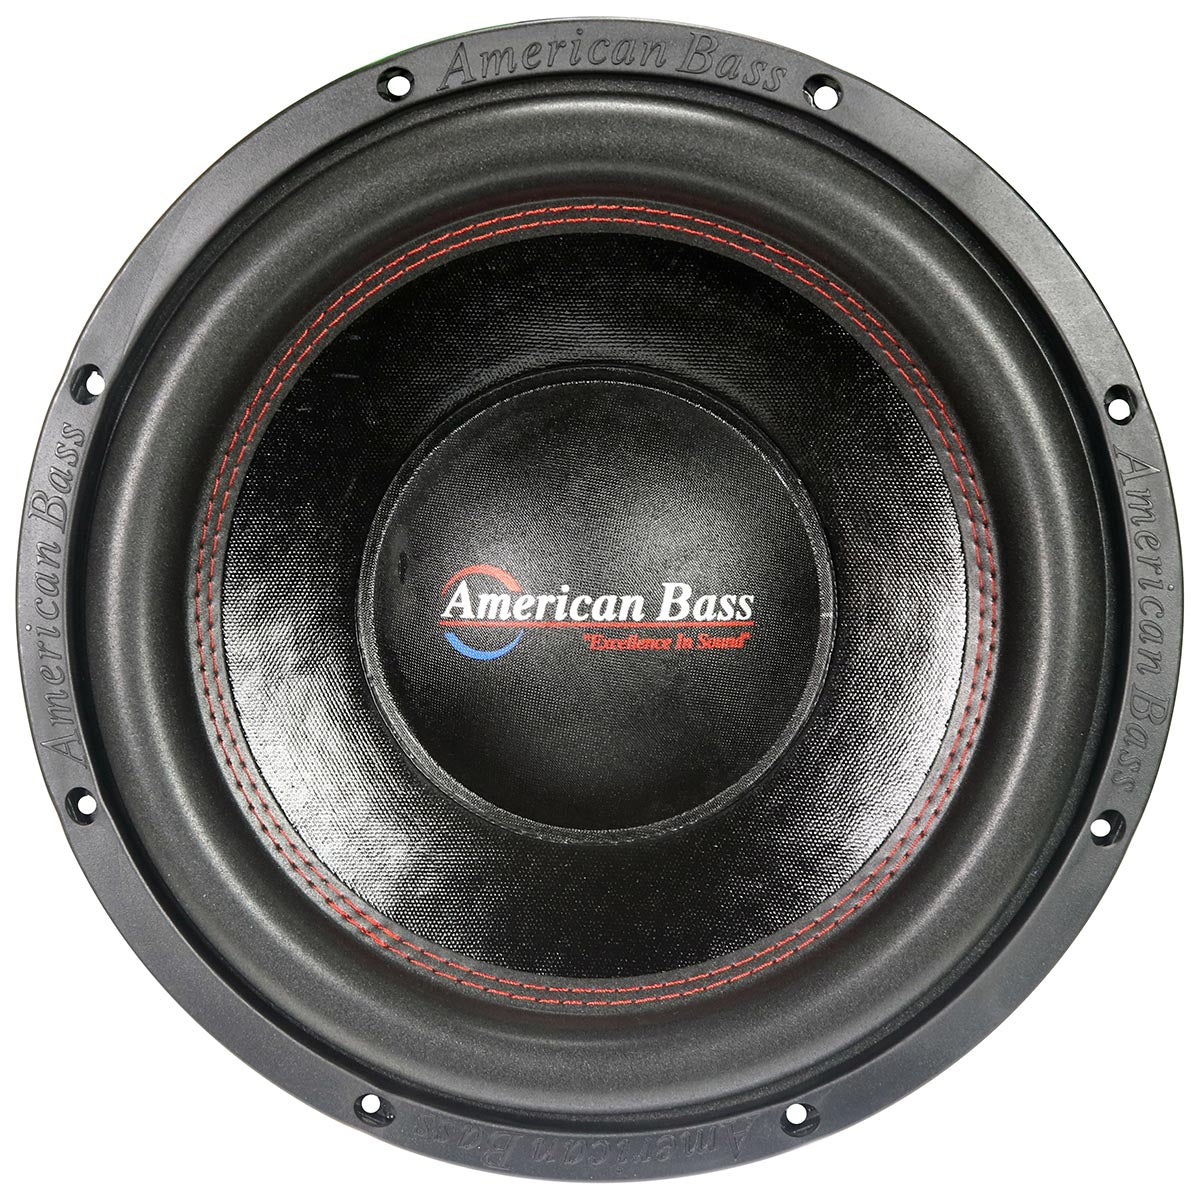 American Bass 12" Woofer 600 Watts Max 4 Ohm Svc